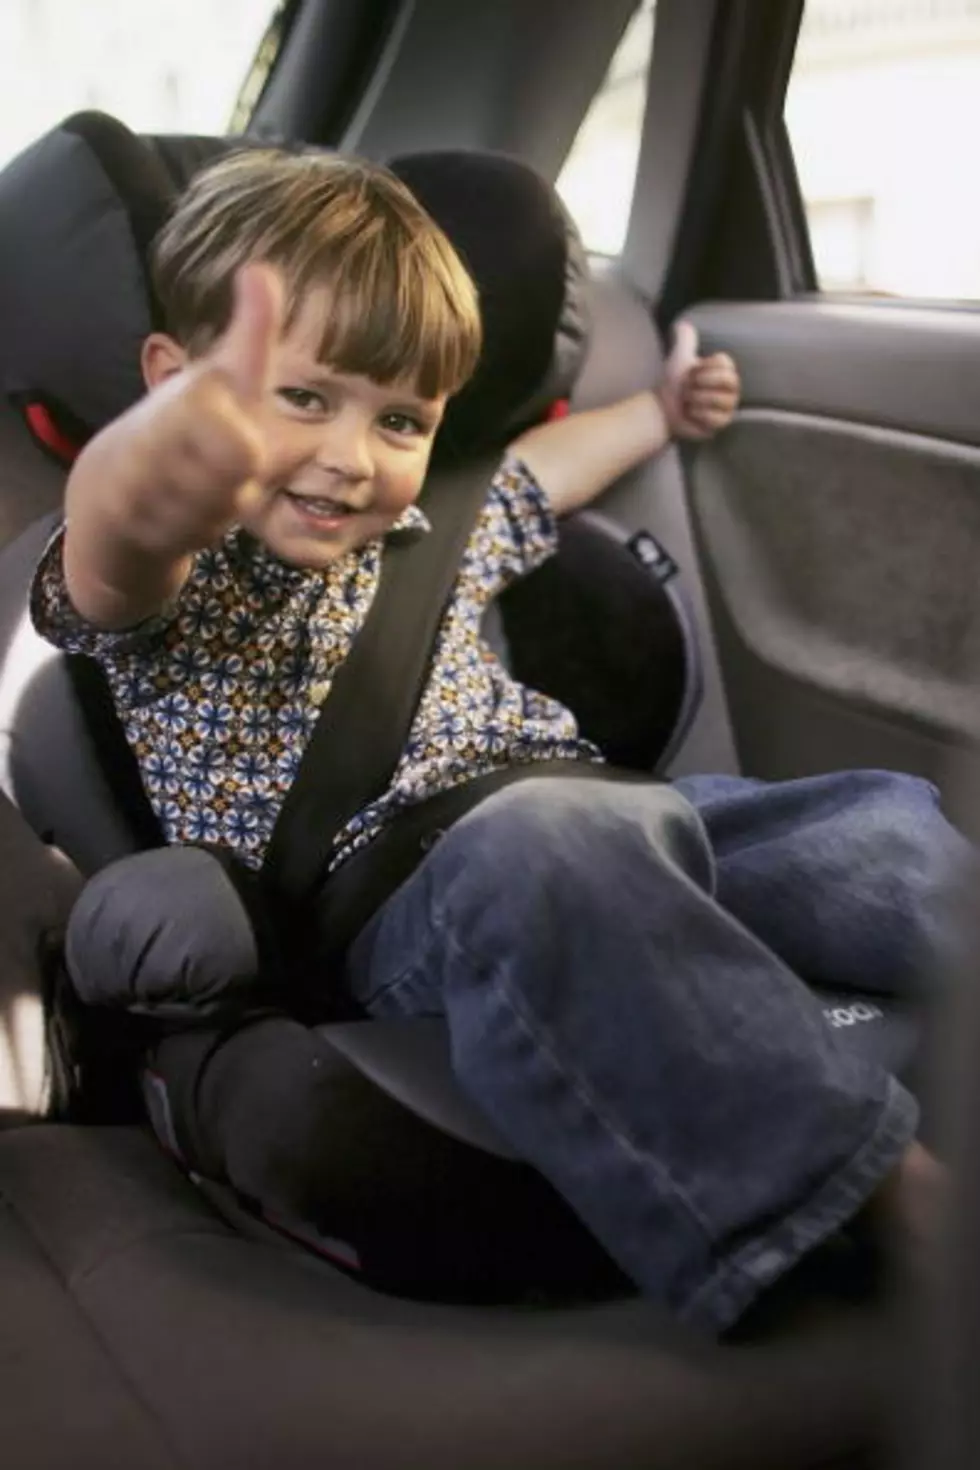 FREE Child Car Seat Inspection Next Week